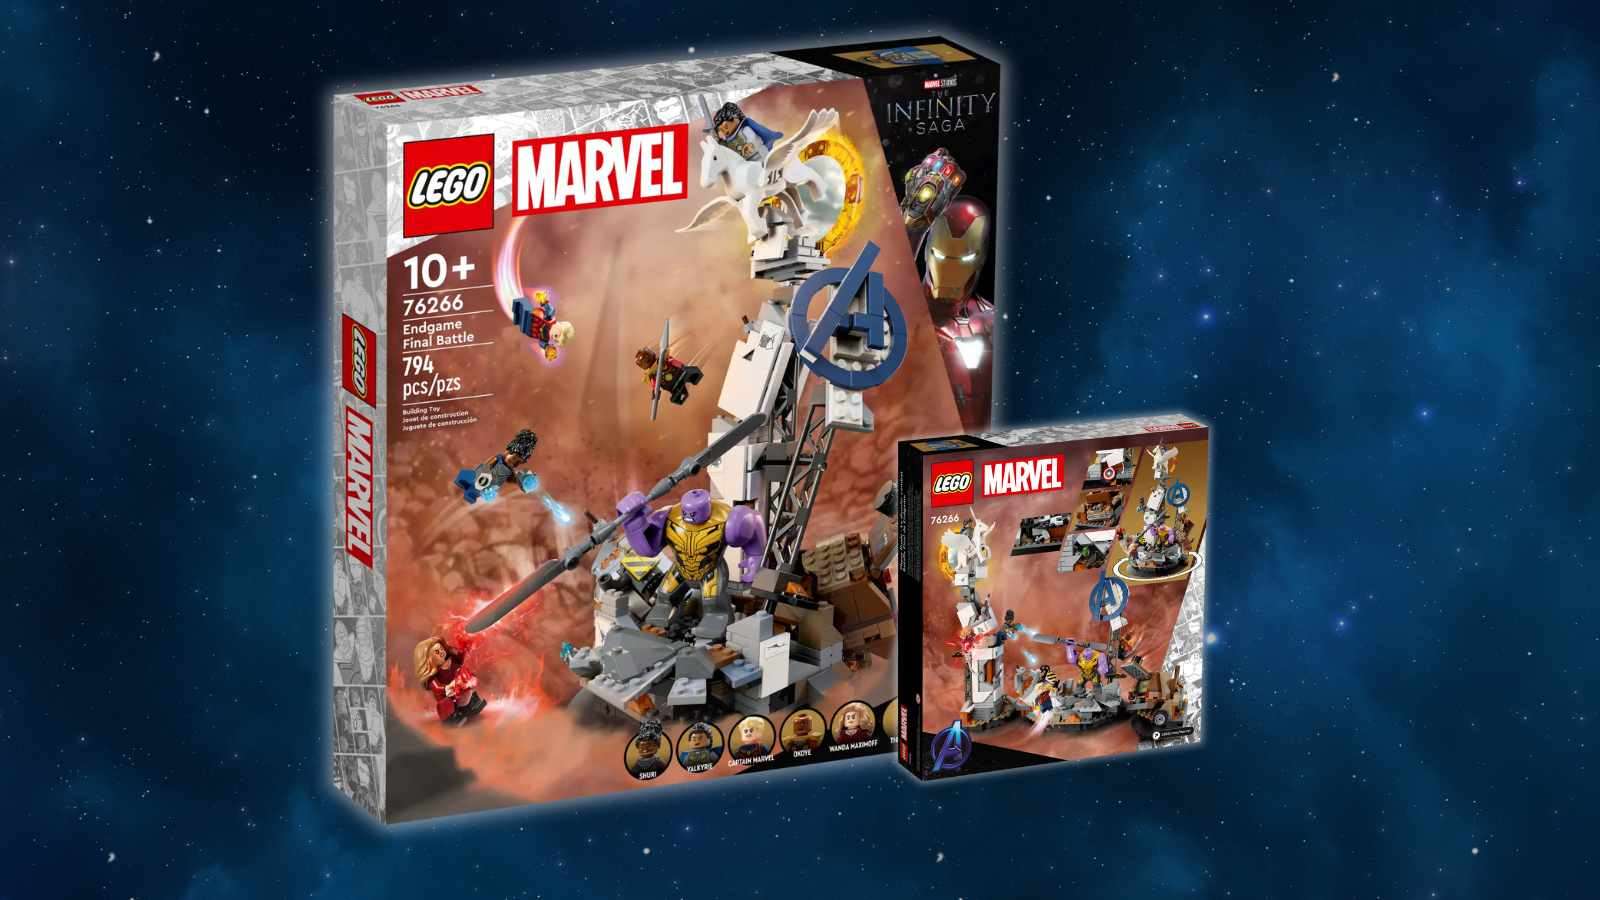 LEGO Marvel Endgame Final Battle set on a galaxy background